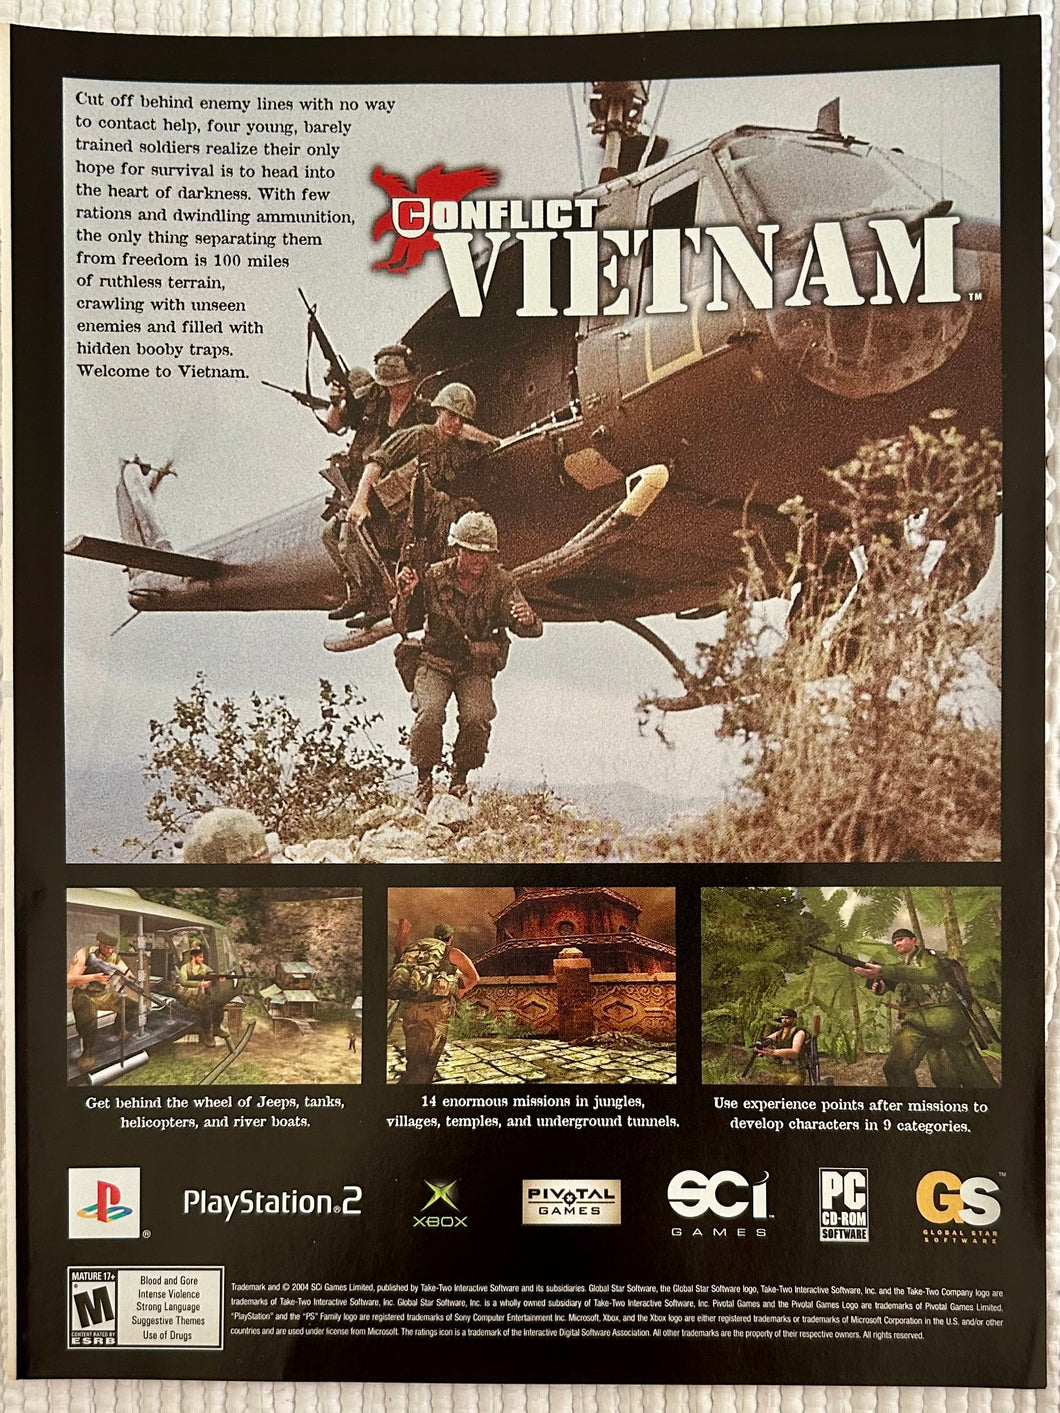 Conflict Vietnam - PS2 Xbox - Original Vintage Advertisement - Print Ads - Laminated A4 Poster